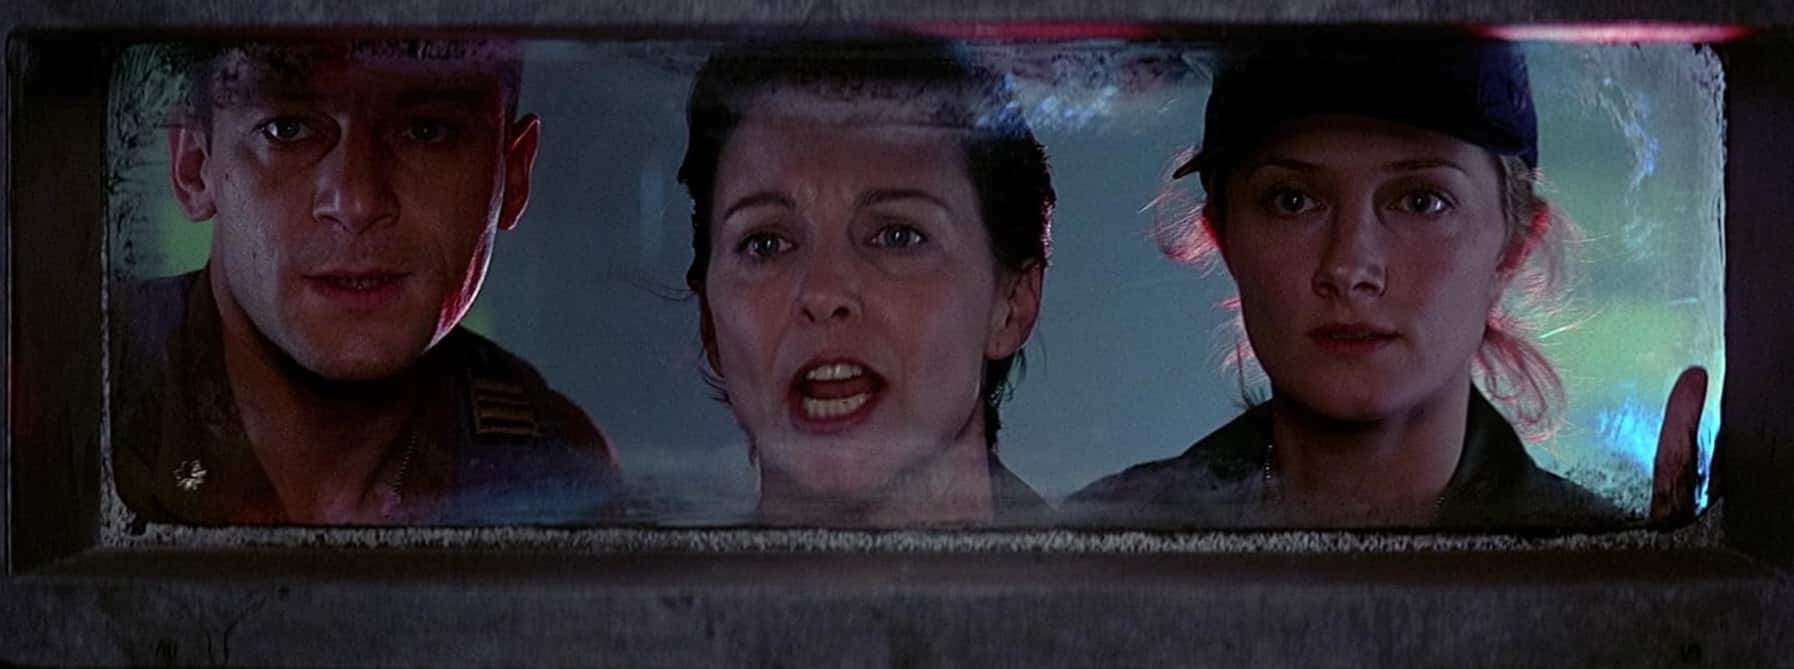 Kathleen Quinlan, Joely Richardson, and Jason Isaacs in Event Horizon (1997)